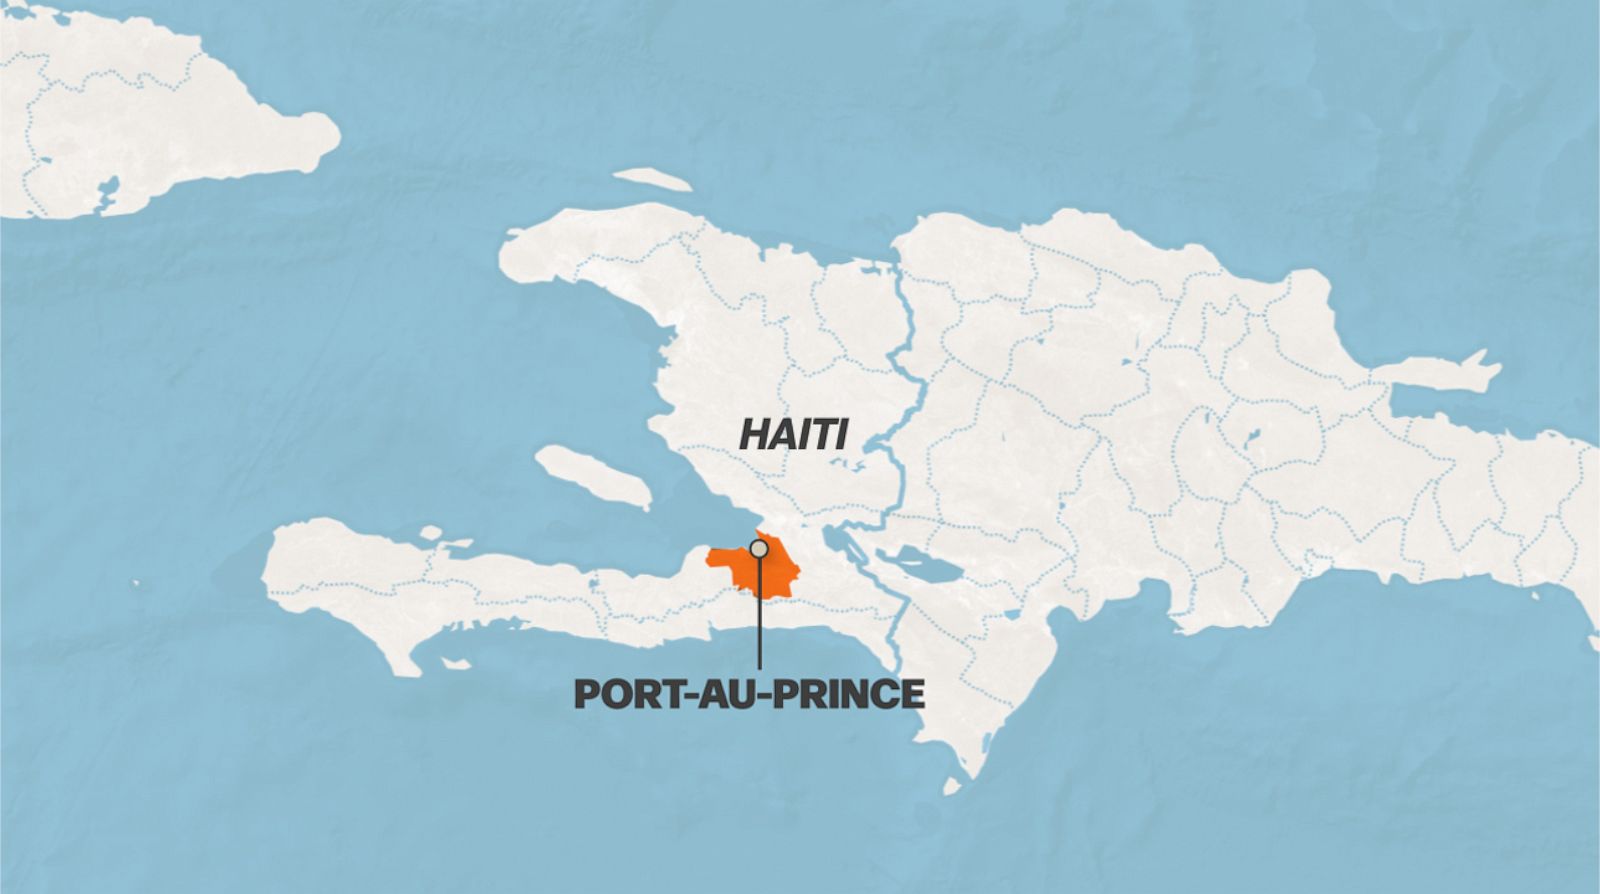 https://s.abcnews.com/images/International/Map_Haiti_PORT-AU-PRINCE_v04_dnl_1687799249795_hpEmbed_25x14_1600.jpg